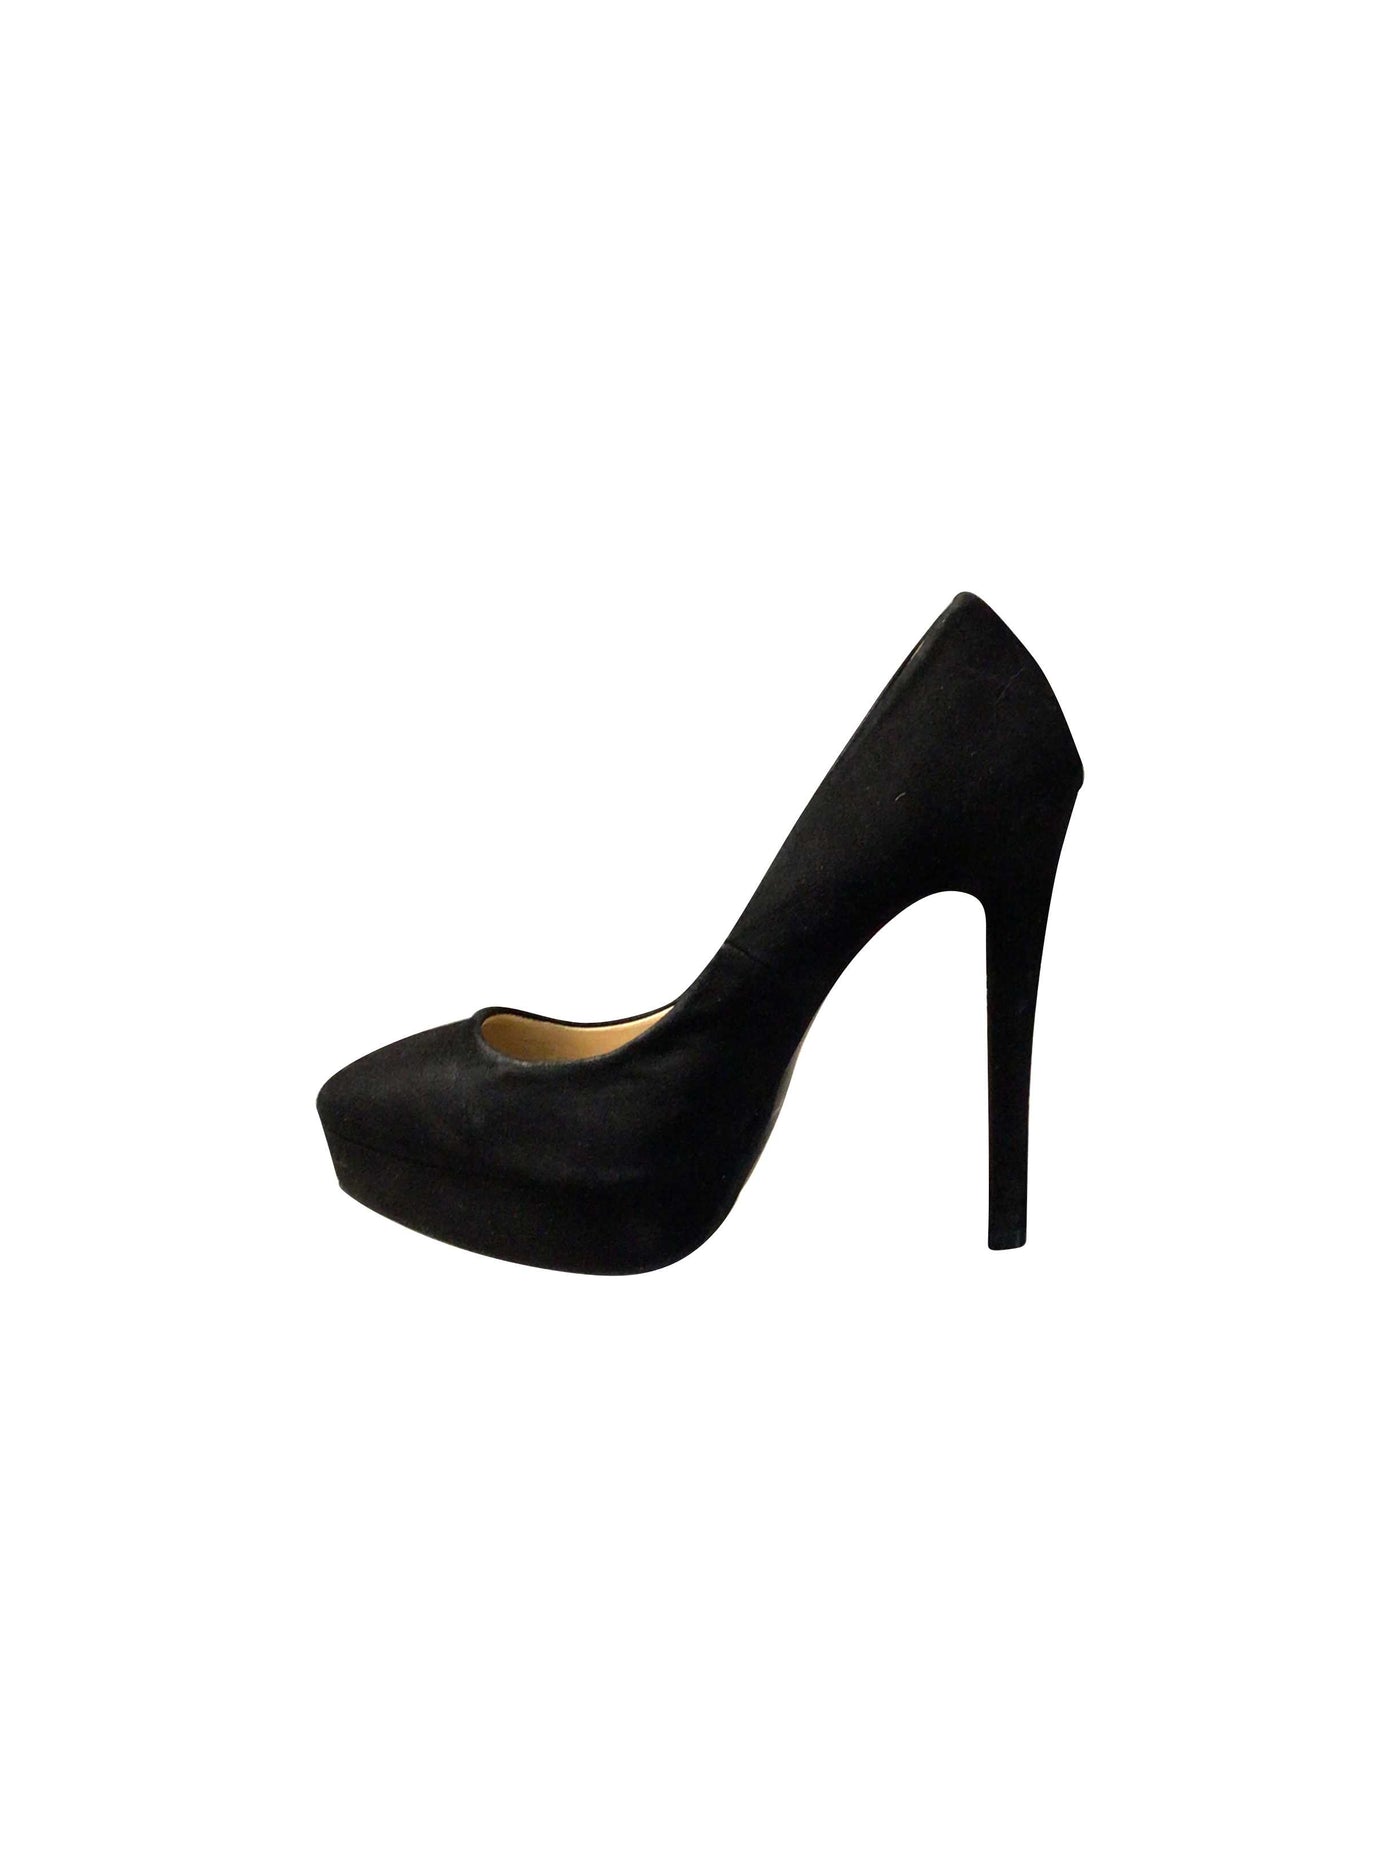 ZARA High Heels in Black  -  37  23.13 Koop